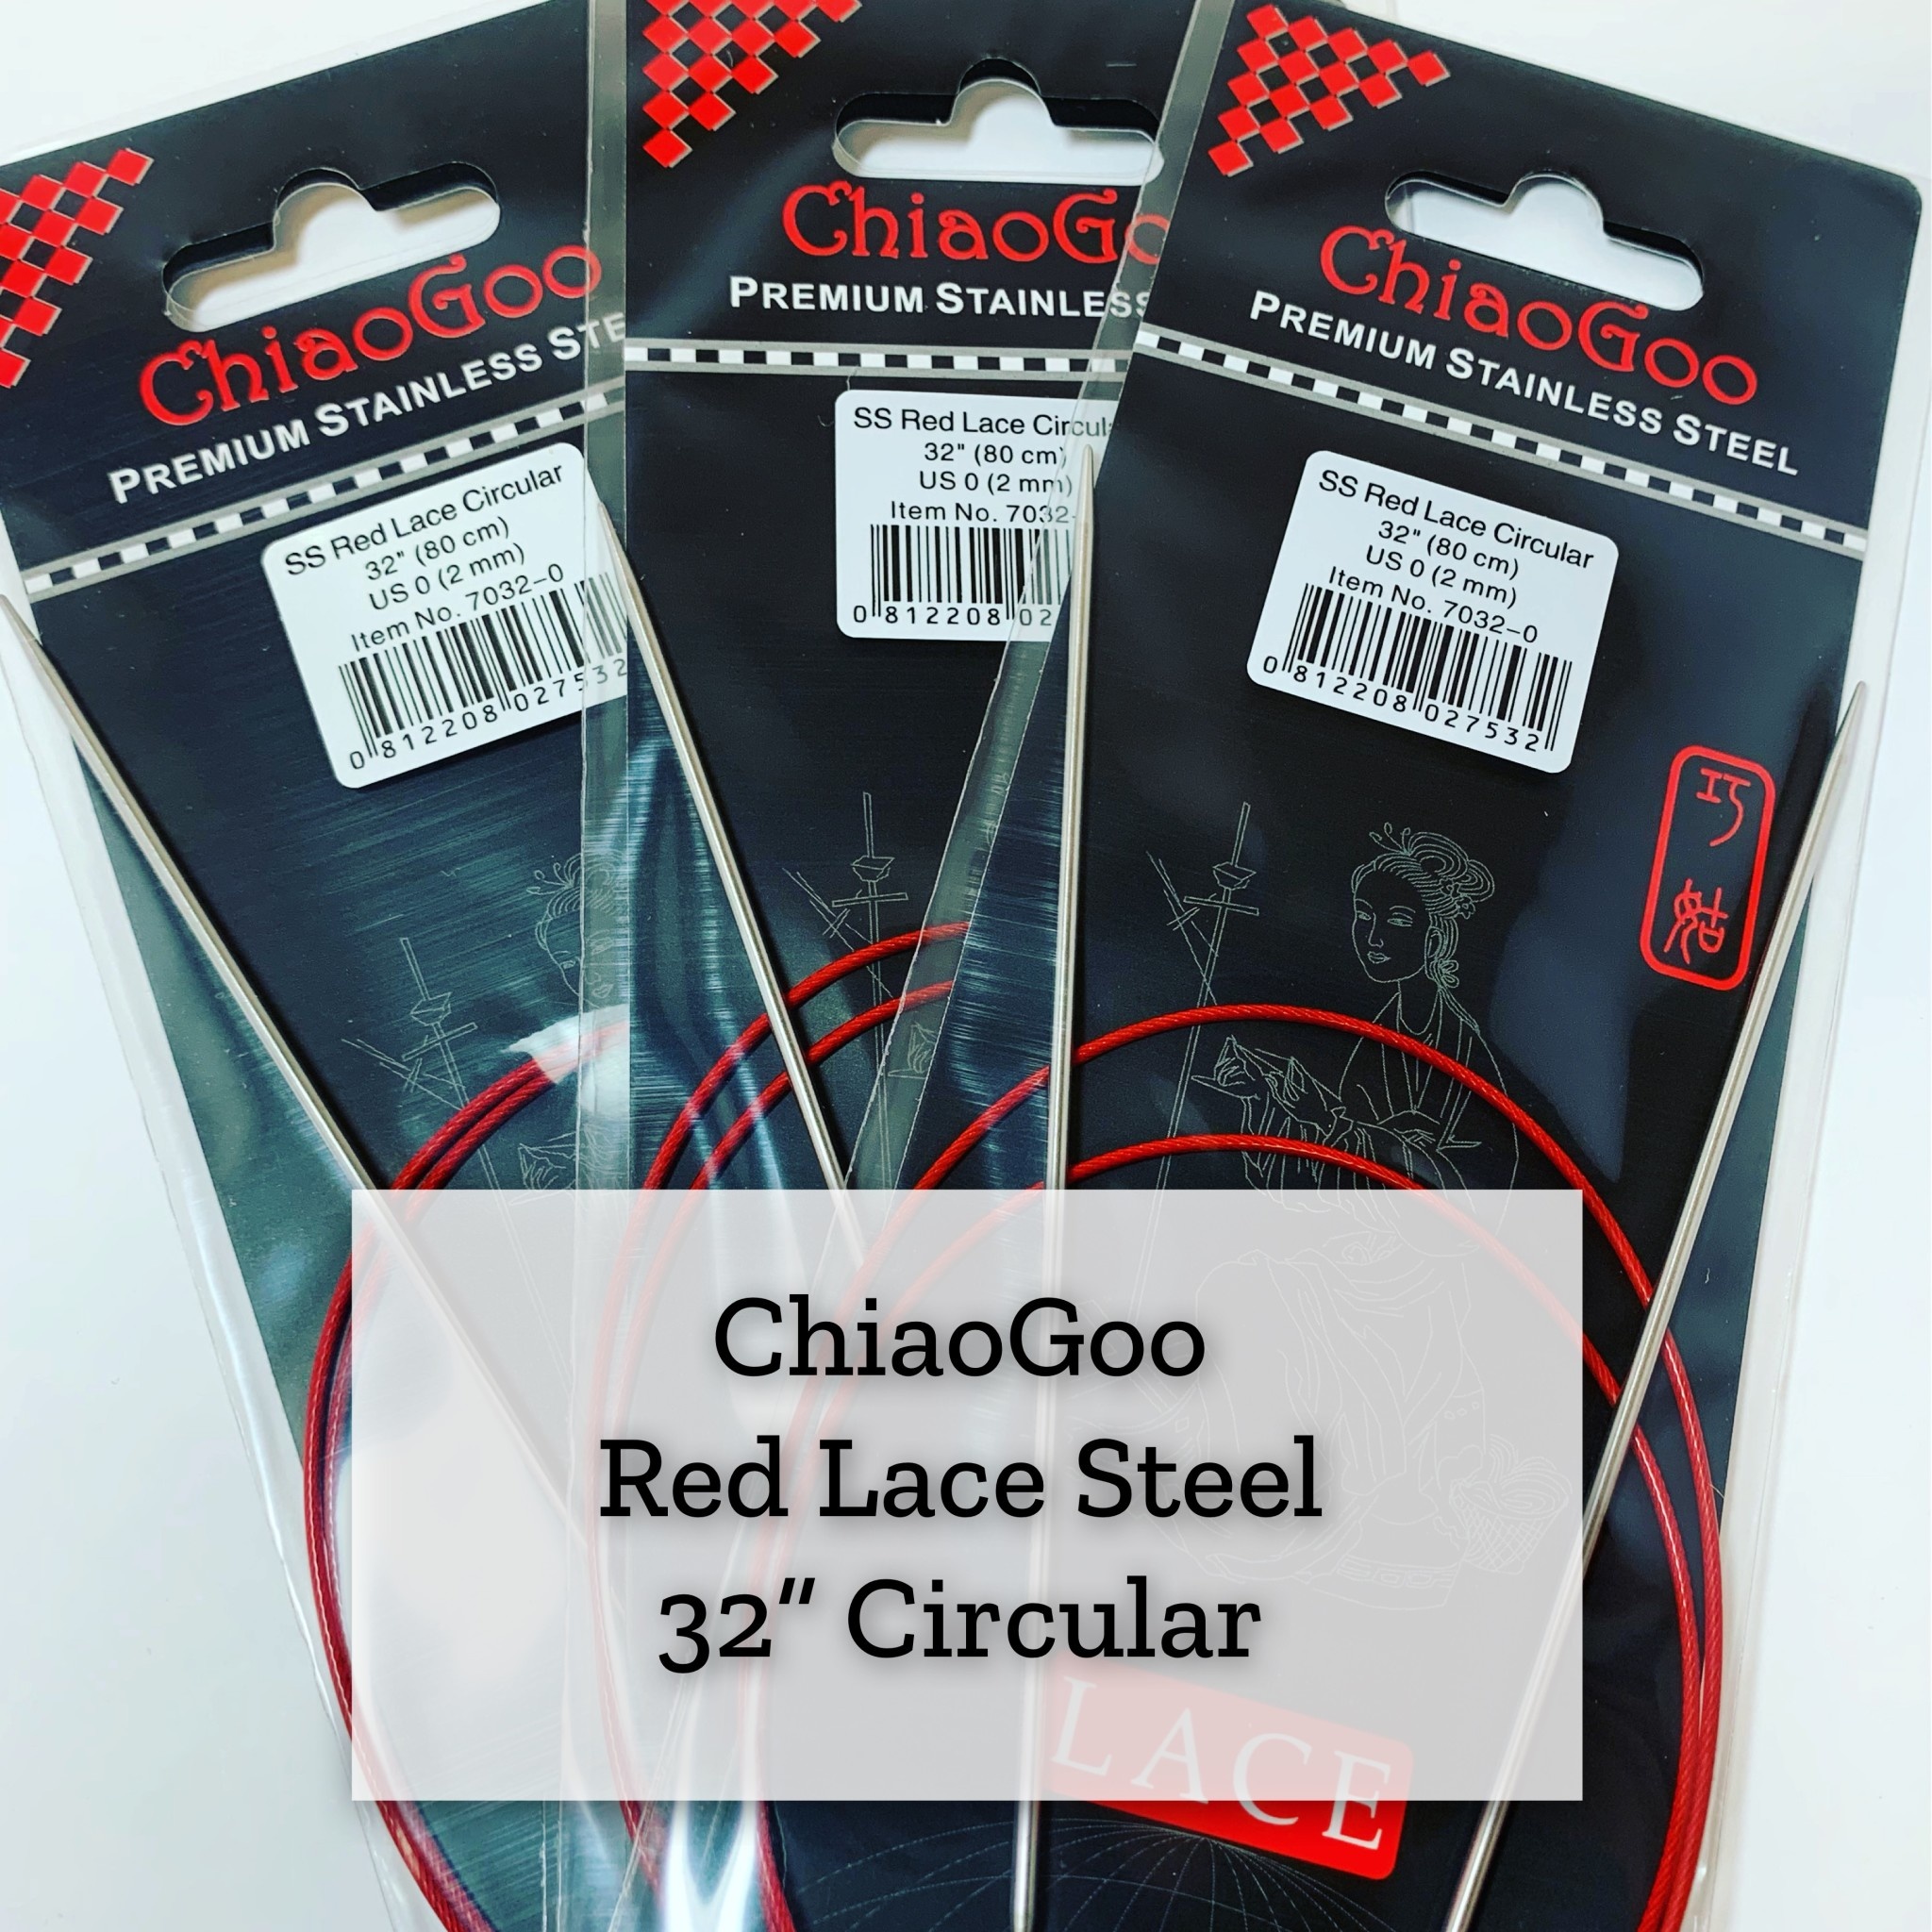 ChiaoGoo Red Lace Steel - 32" 2.25 mm